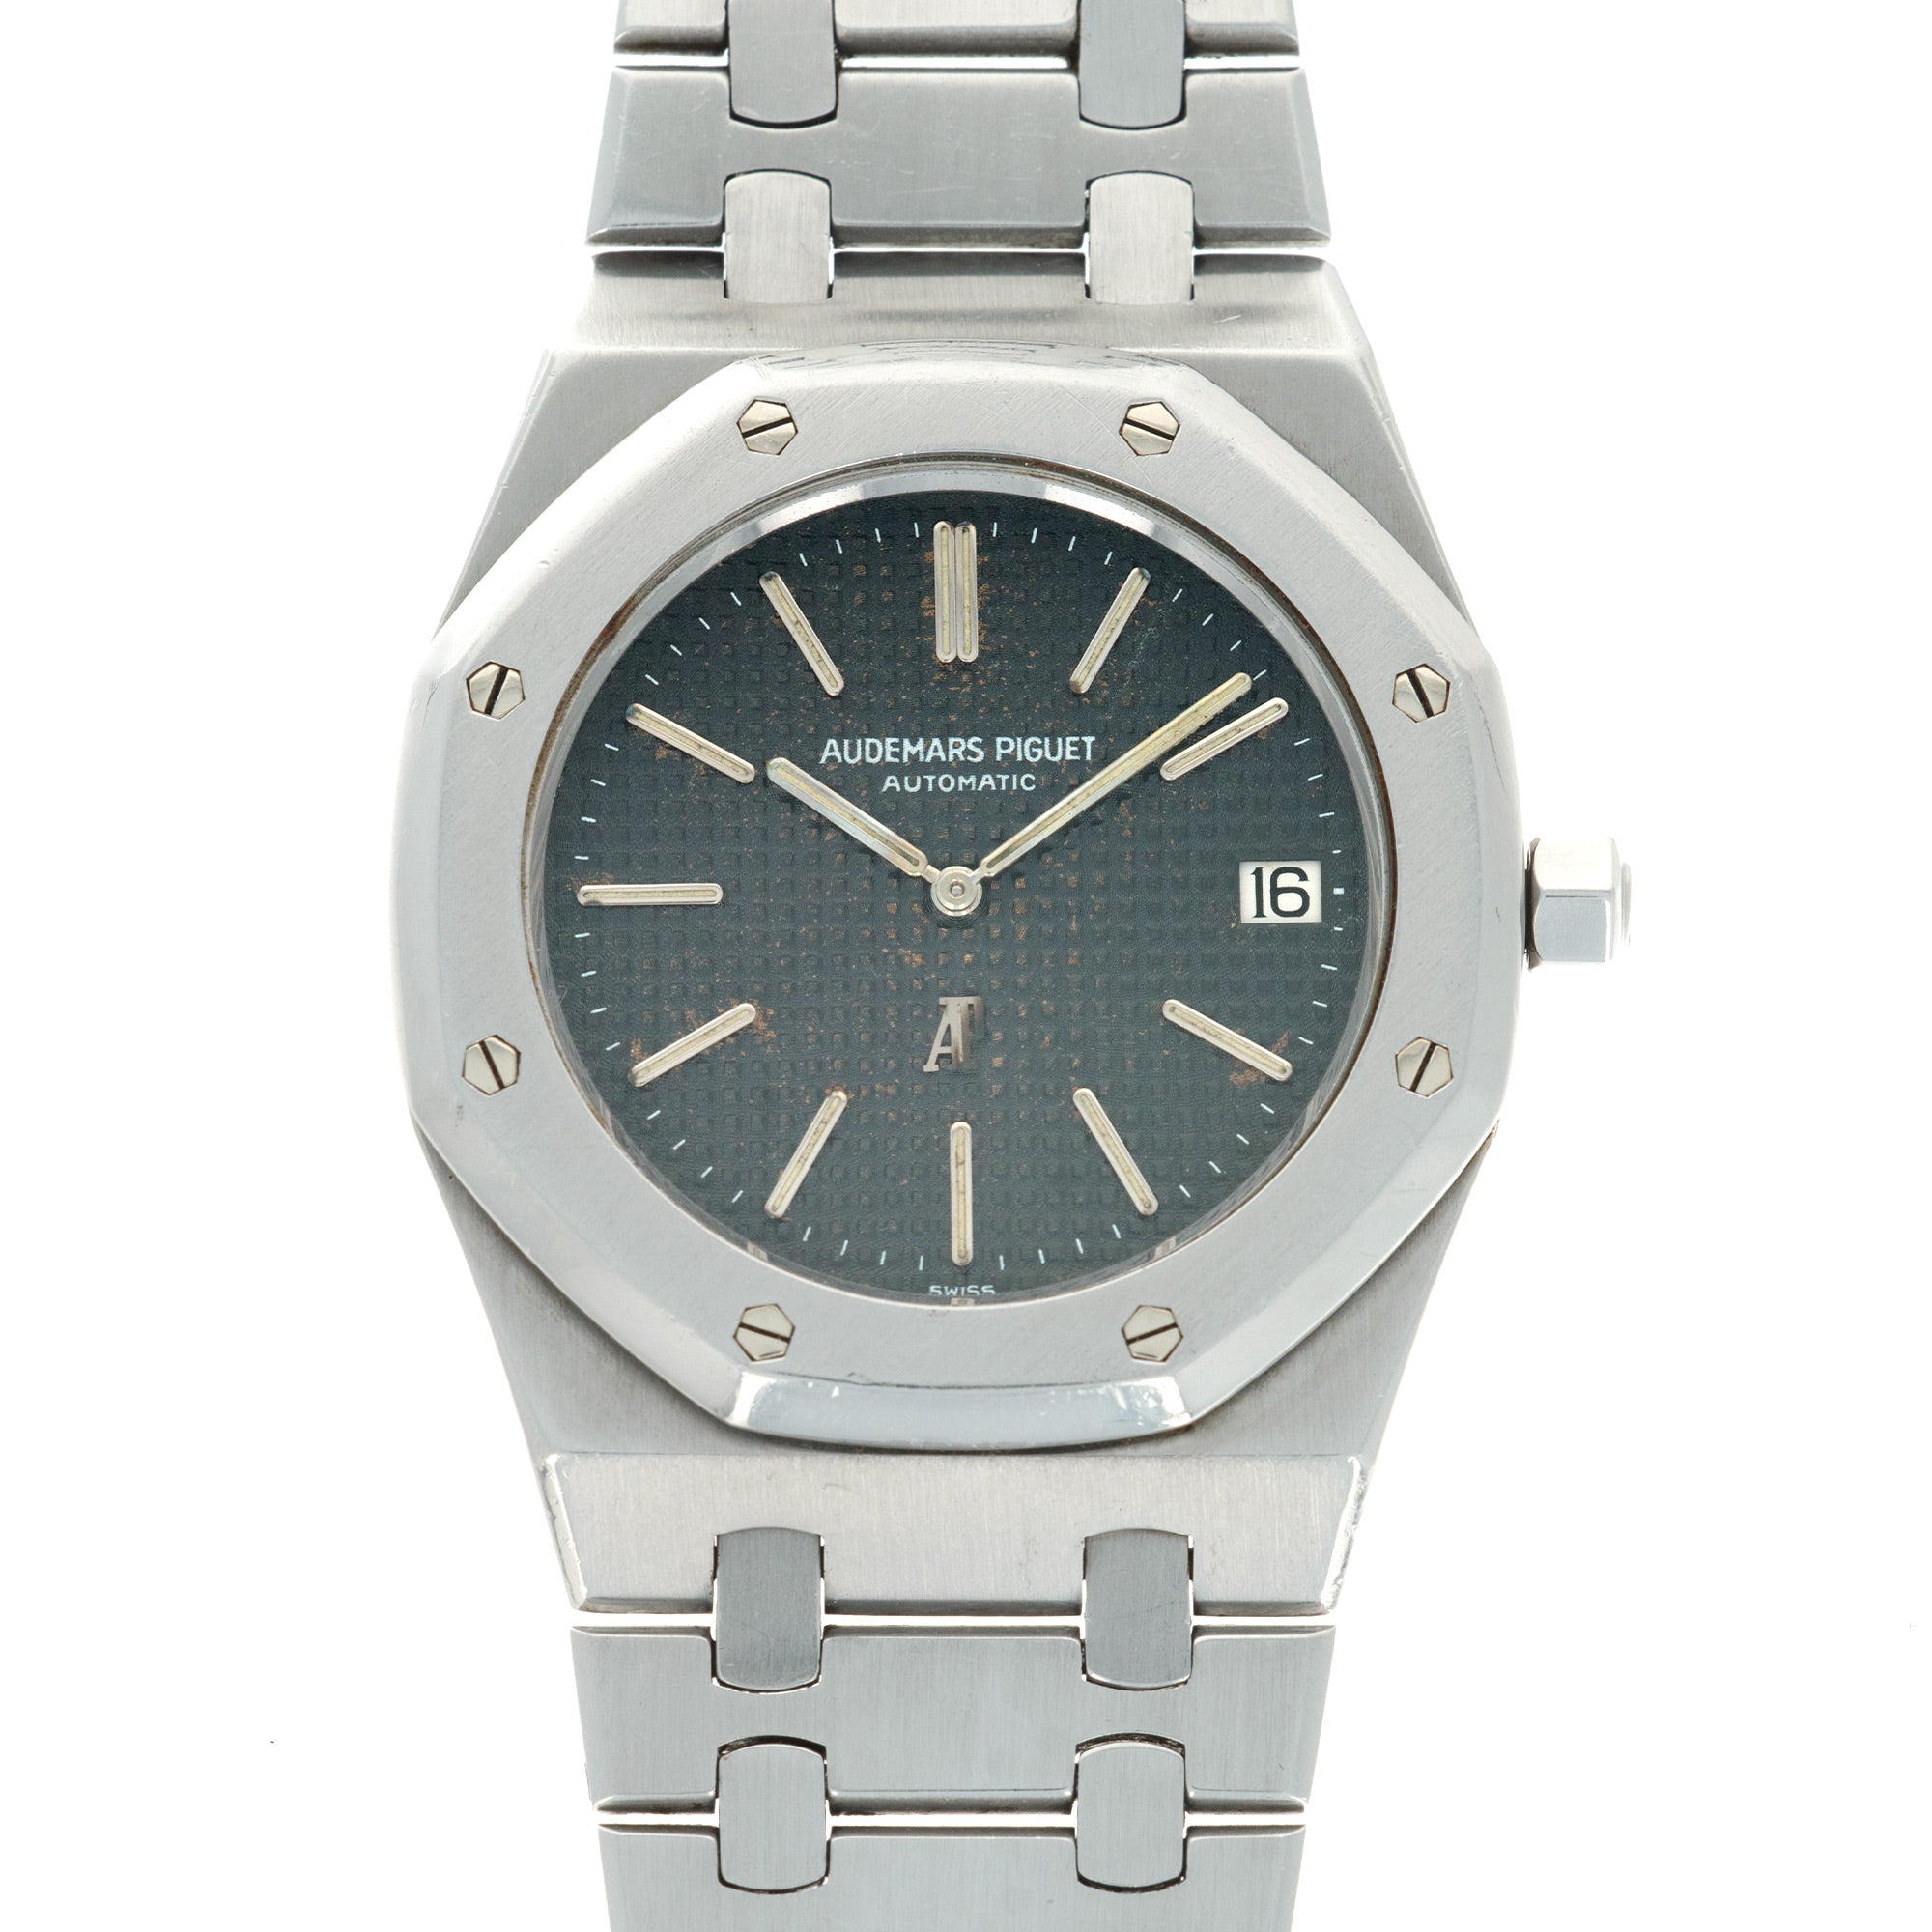 Audemars Piguet - Audemars Piguet Royal Oak A-Series Watch Ref. 5402, Early Low Serial Production - The Keystone Watches